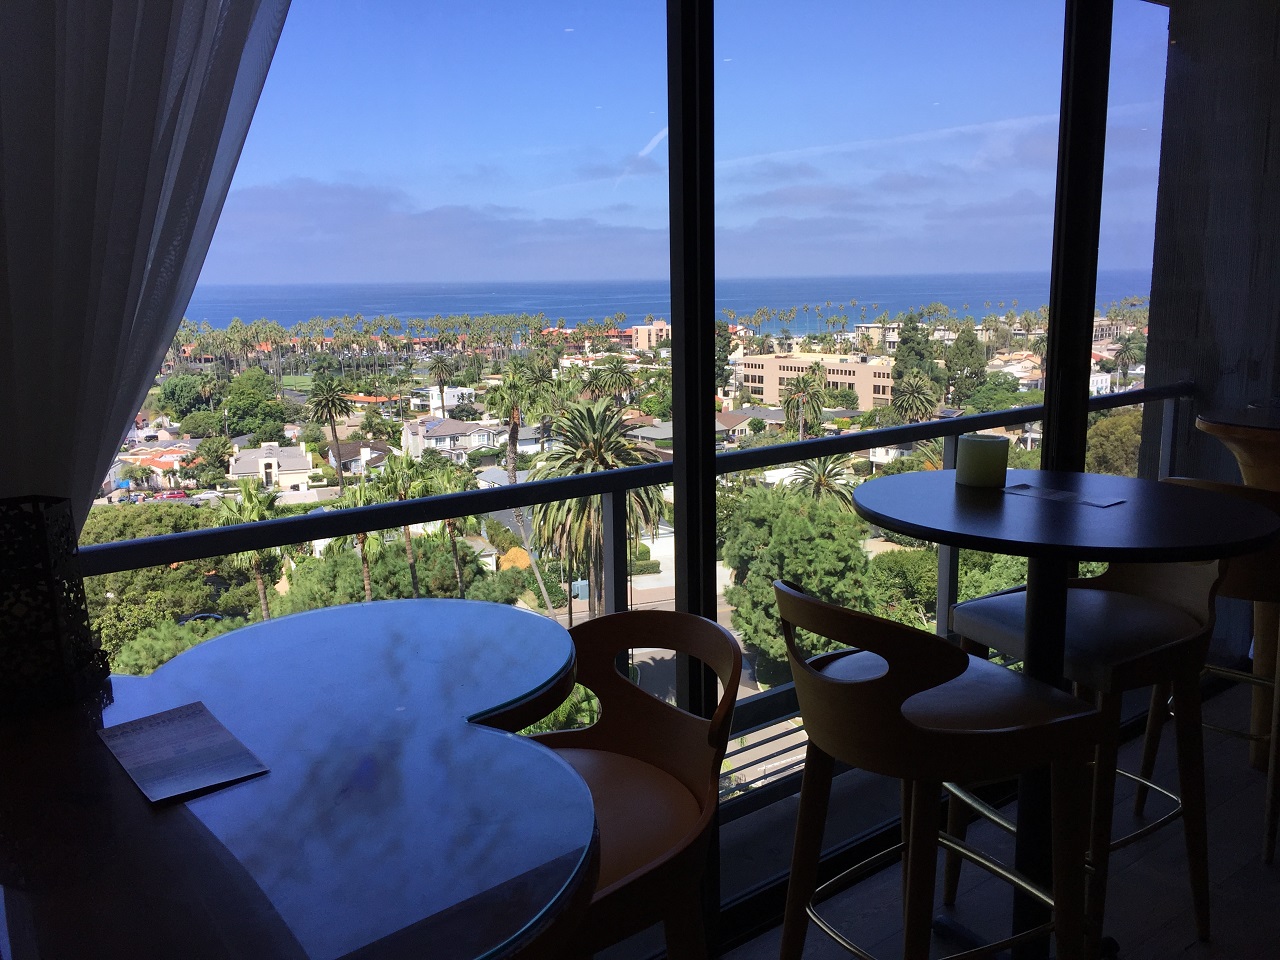 Ocean view from Cusp Restaurant